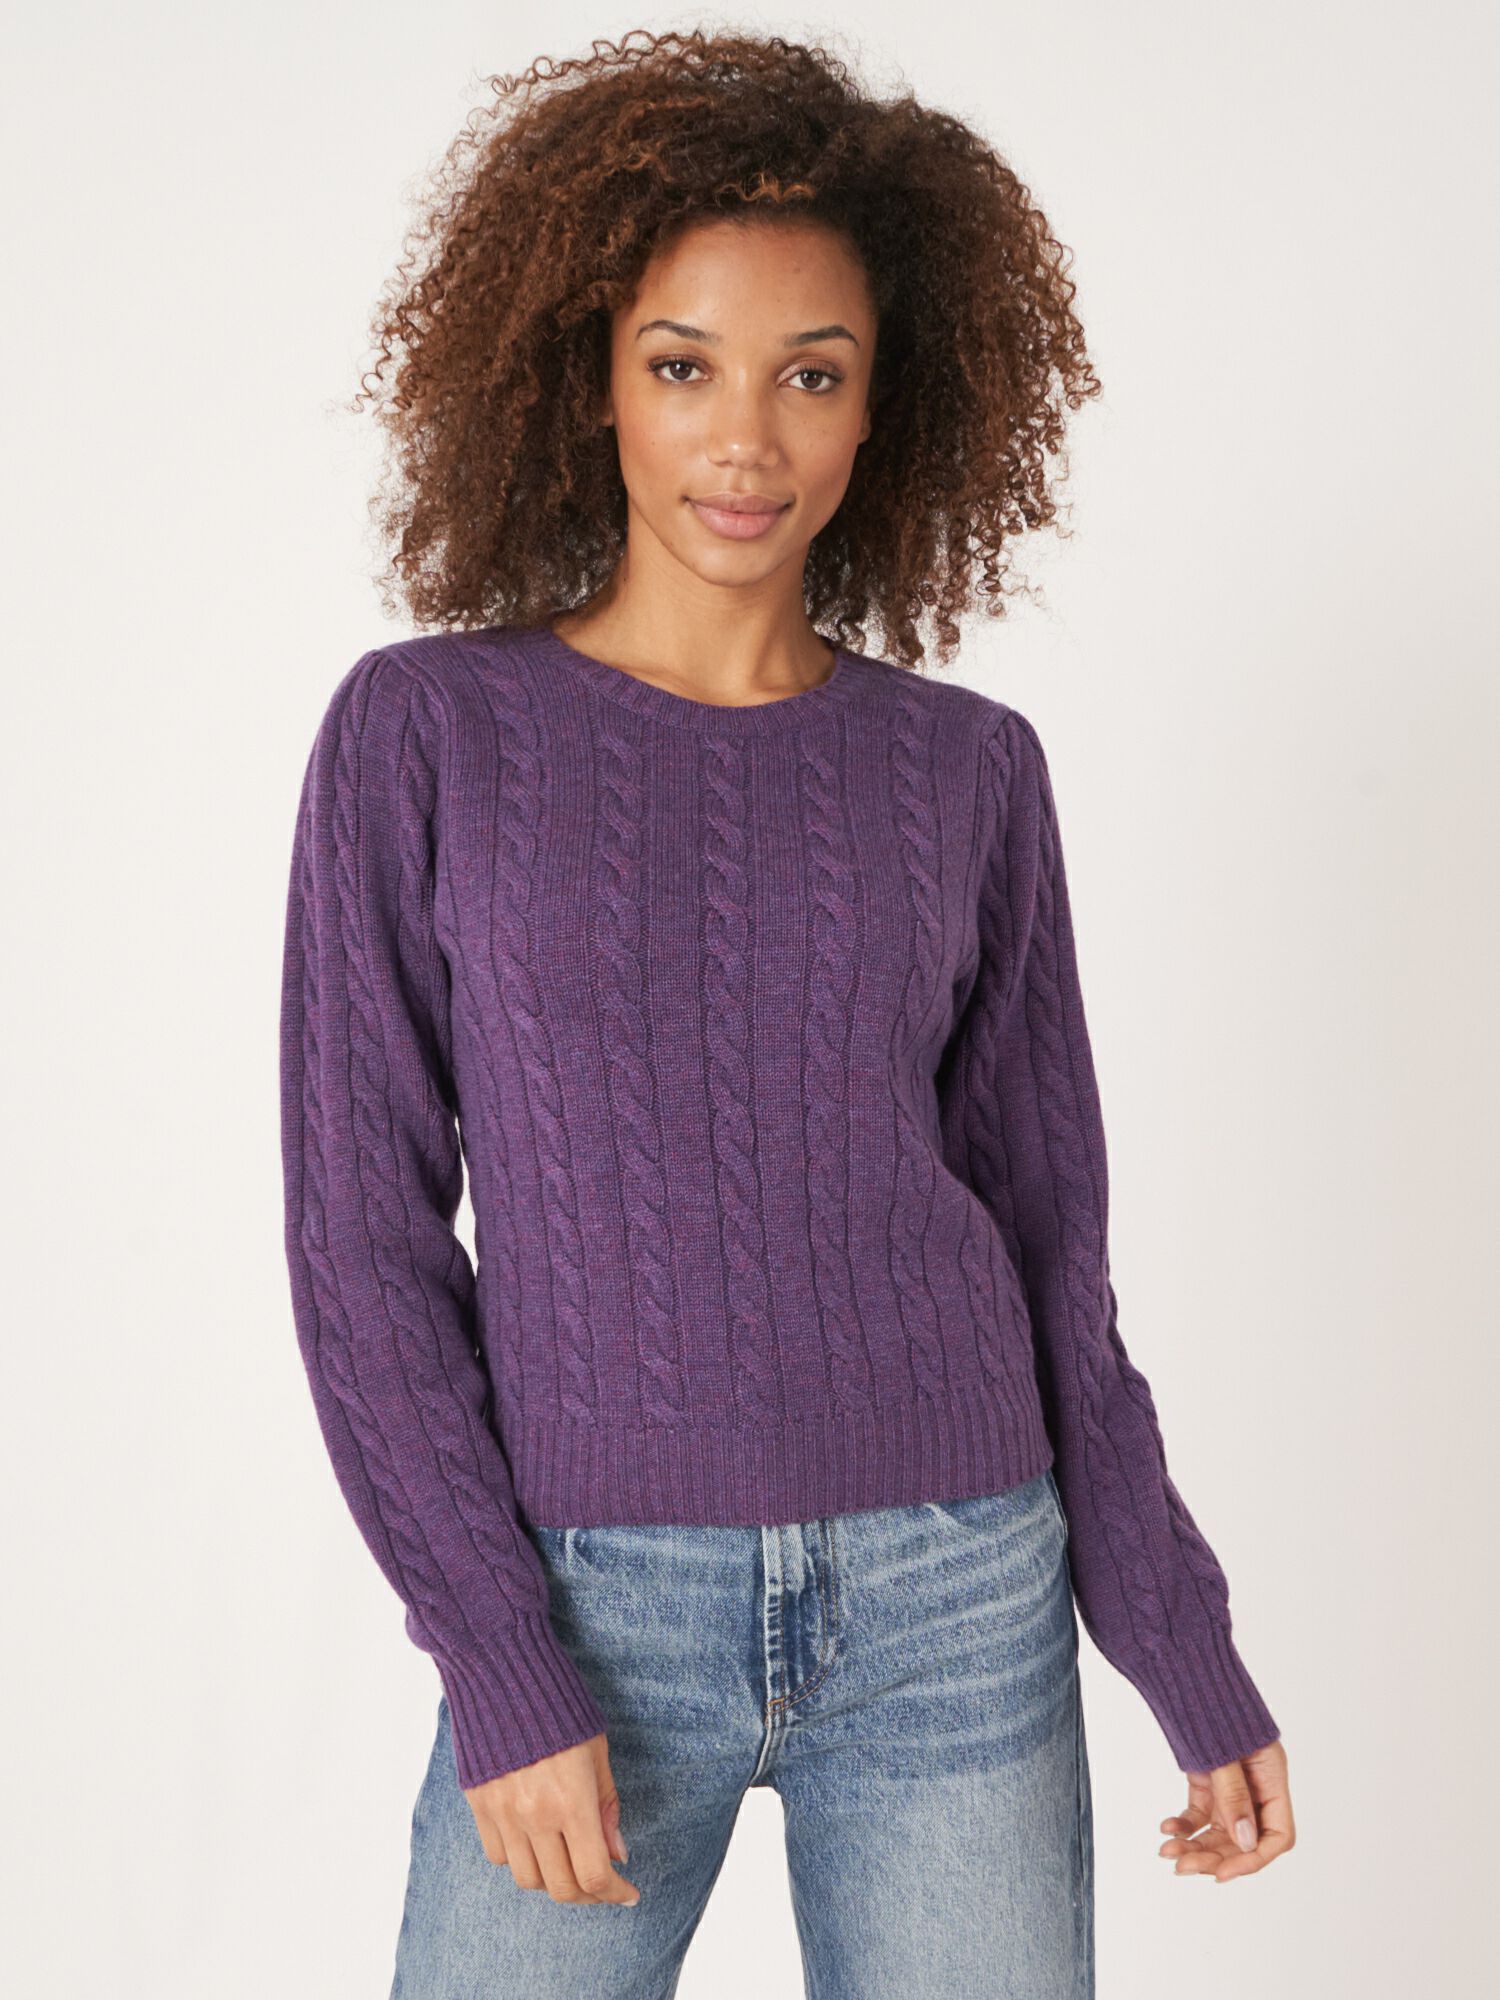 Cashmere Blend Knit Crewneck Sweater